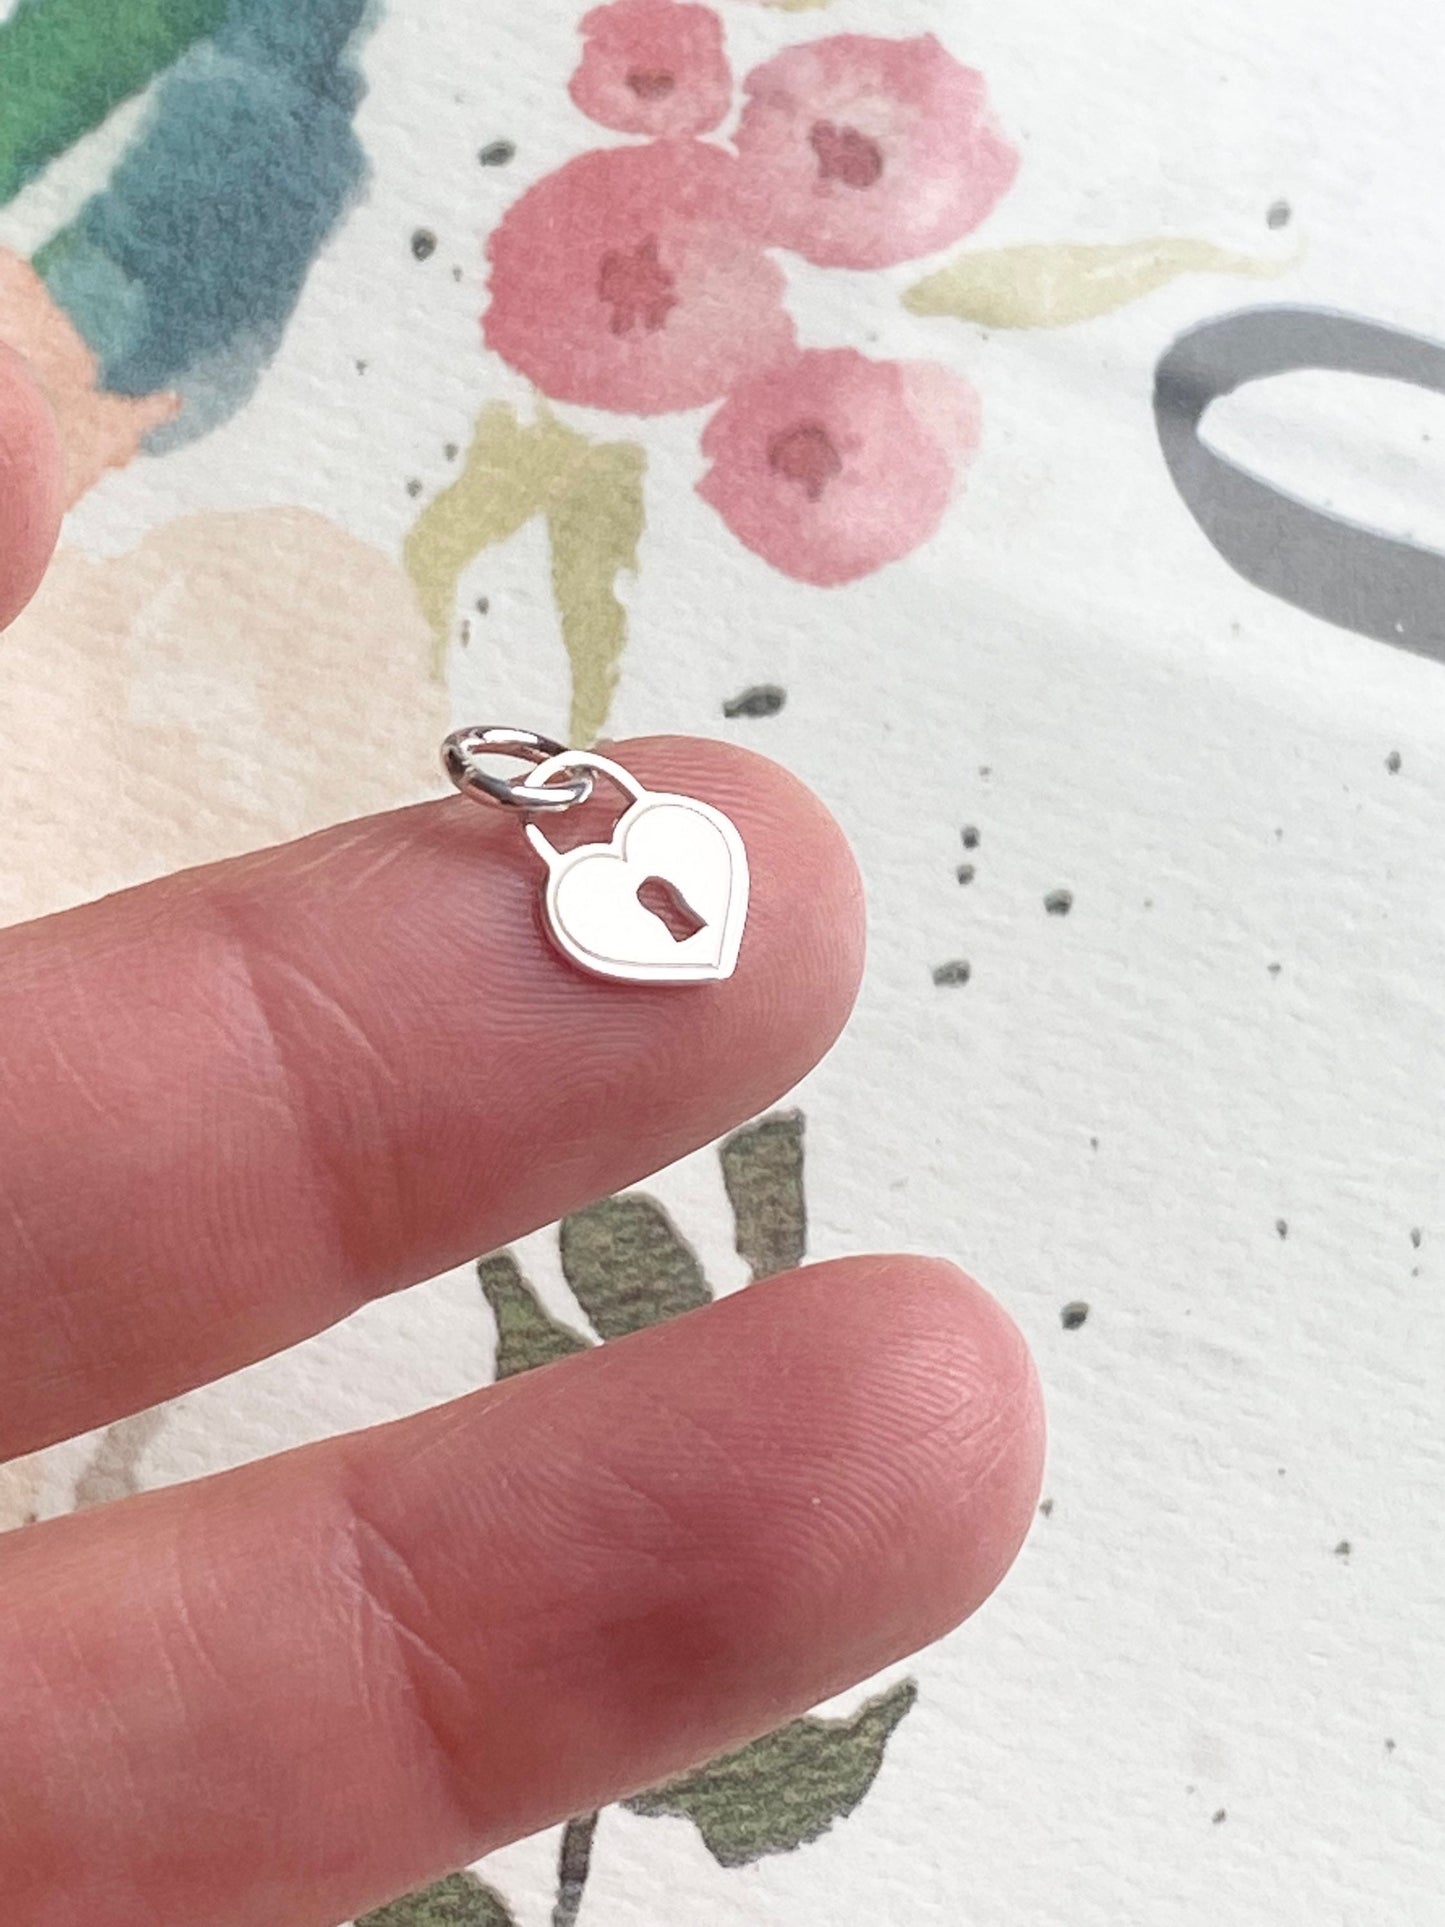 Lock Charm Sterling Silver Tiny Heart Shaped Key Padlock Pendant